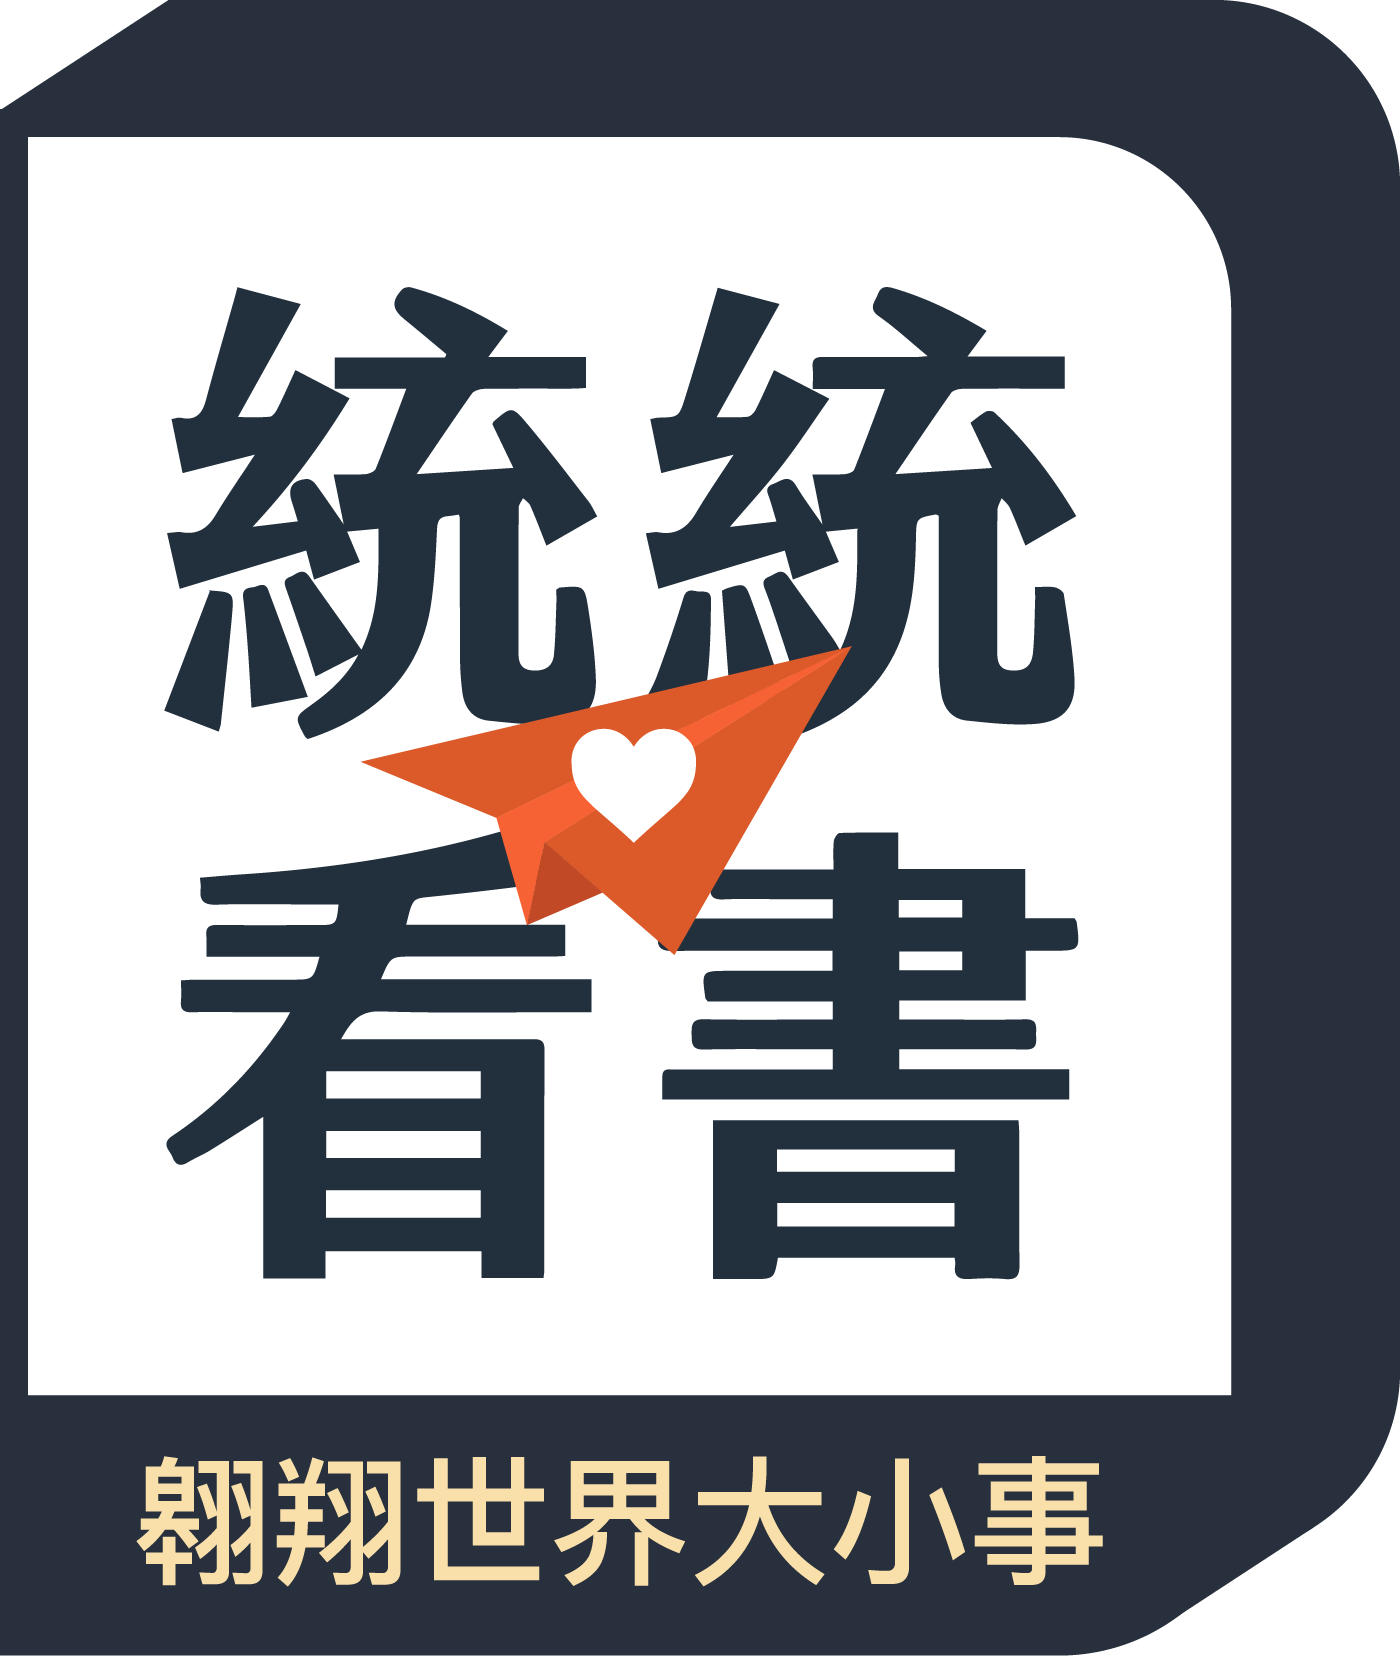 logo of 統統愛看書 tontonreads